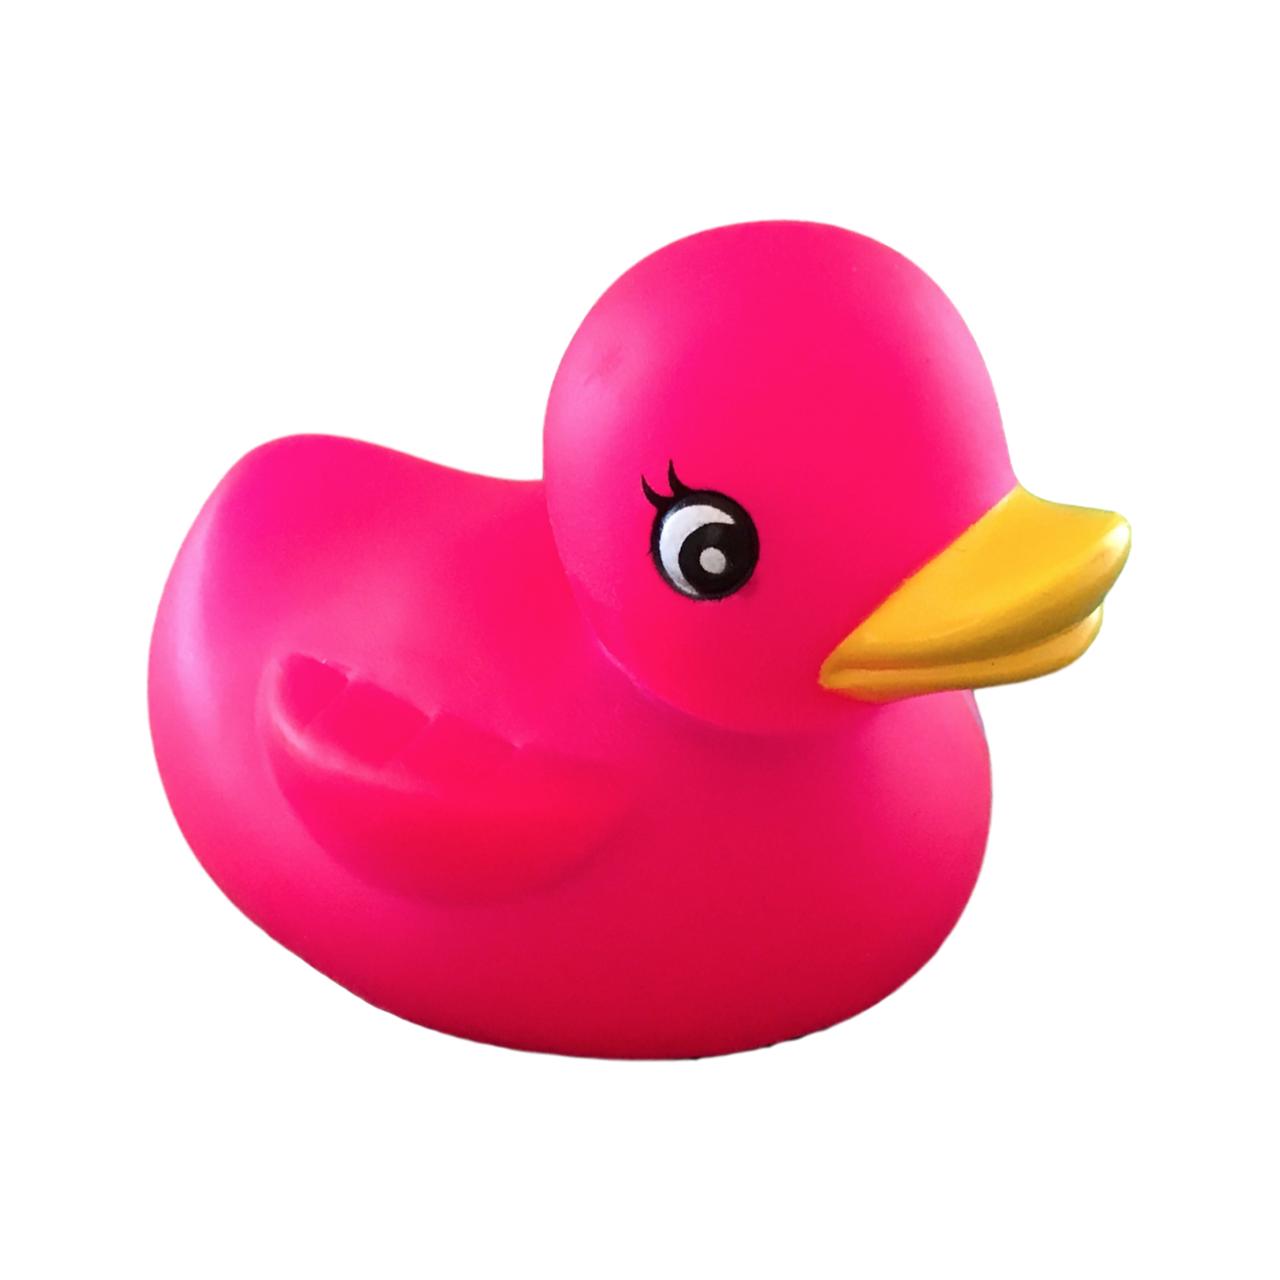 Pink Ribbon Rubber Duck- Rubber Ducks For Sale In Bulk